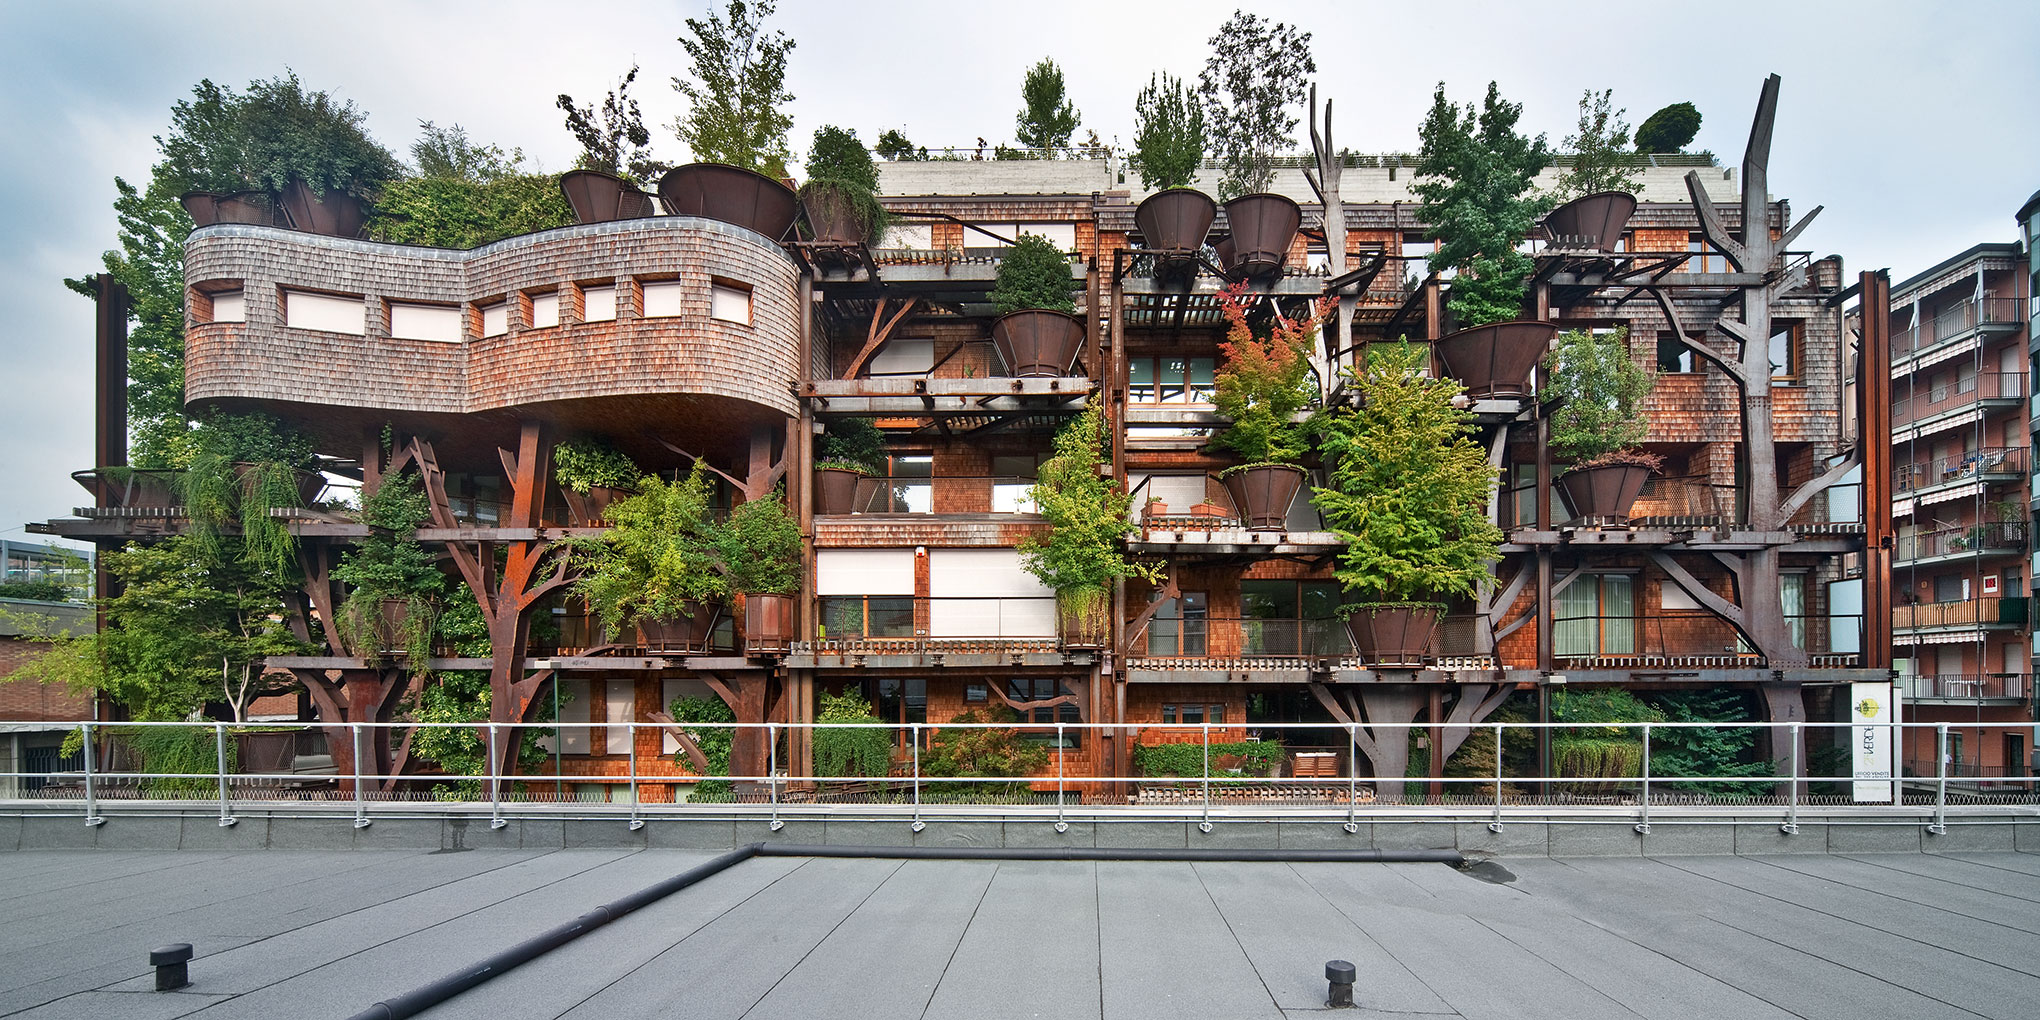 25 Verde, Турин, архитектор: Лучиано Пиа (2007-2013)